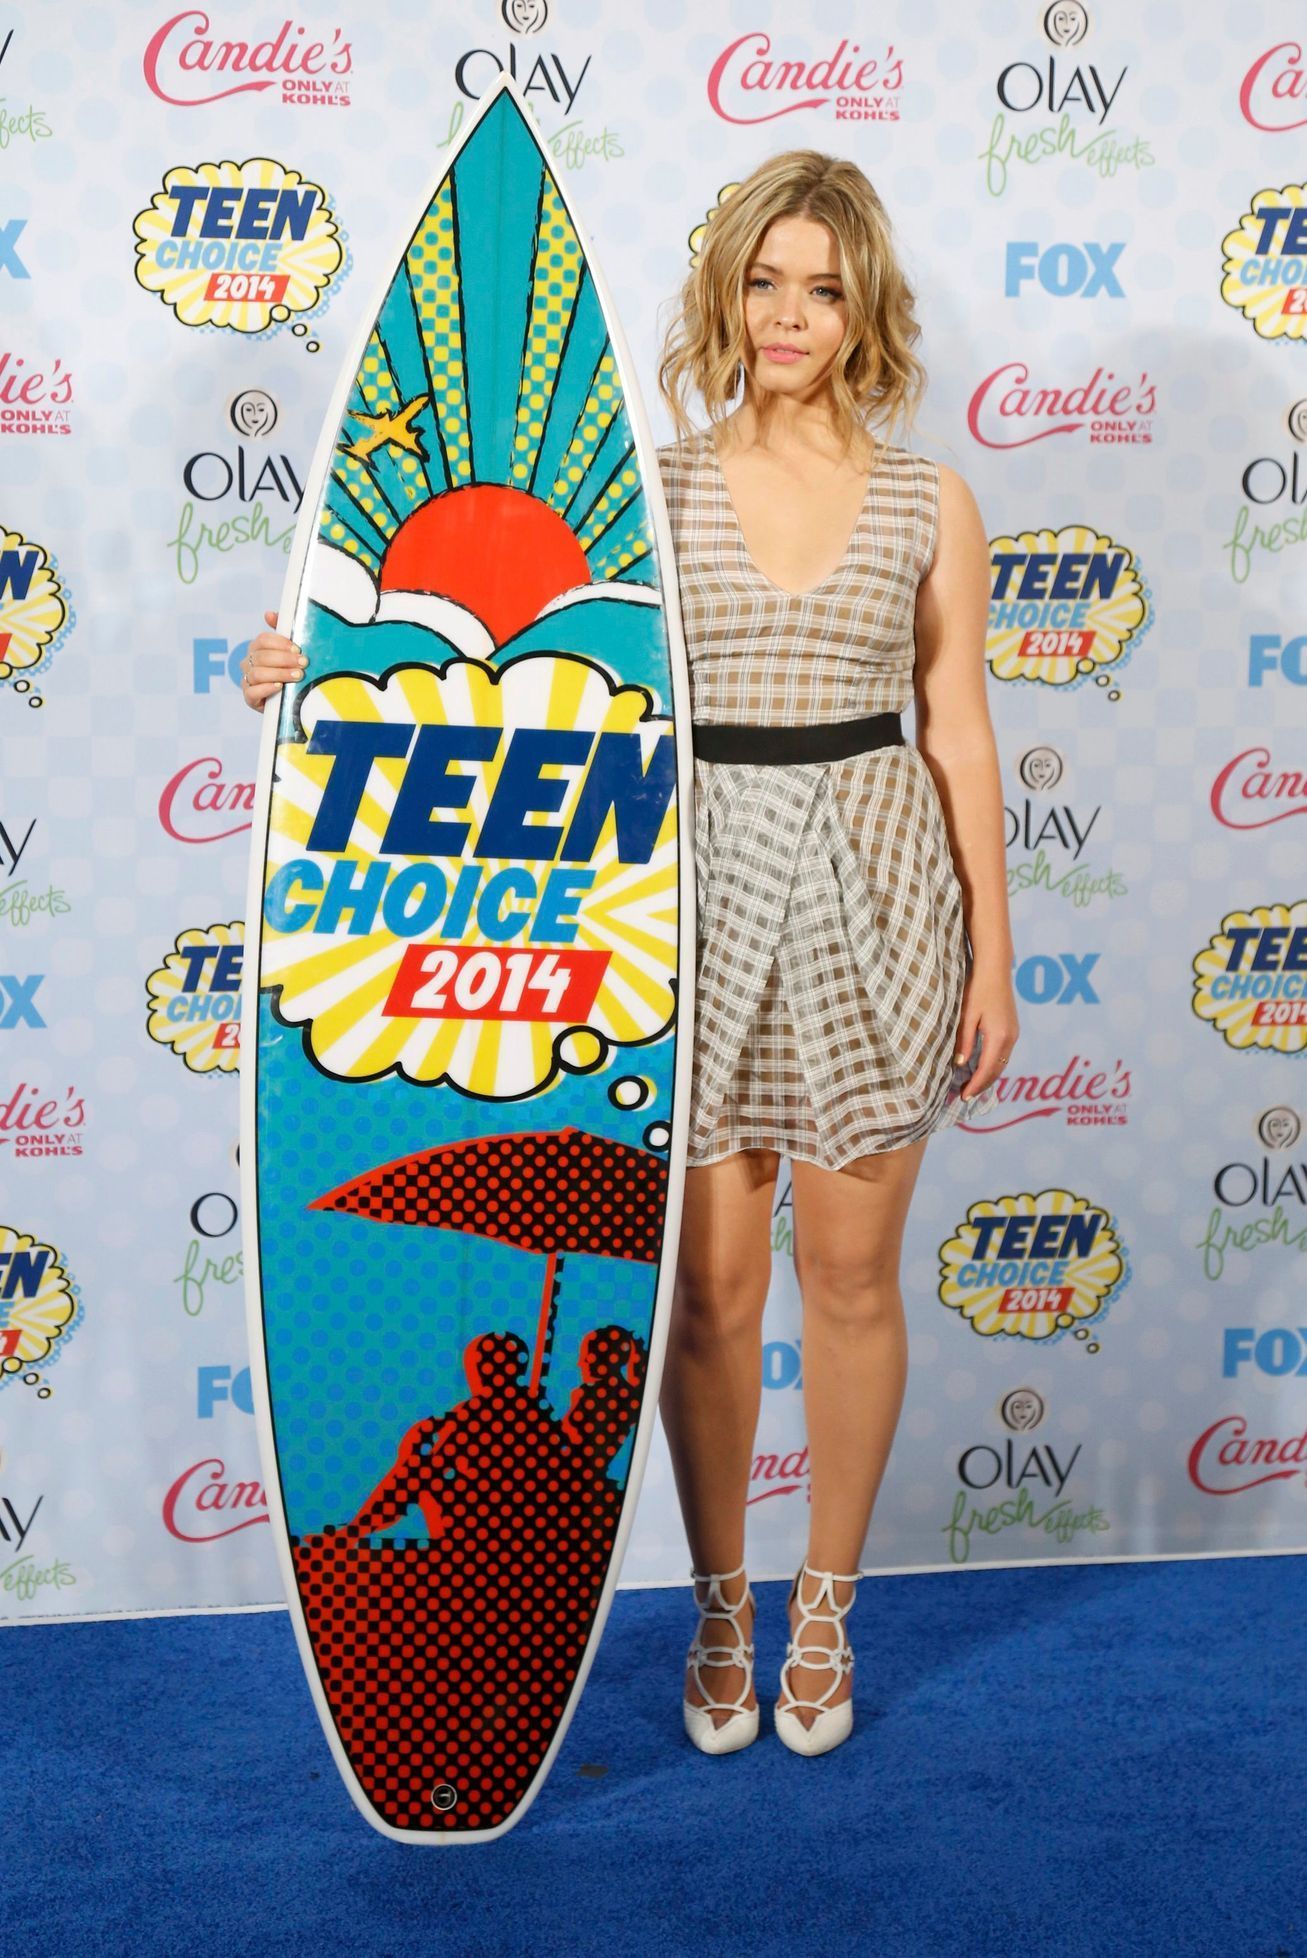 Teen Choice Awards 2014 - Sasha Pieterse